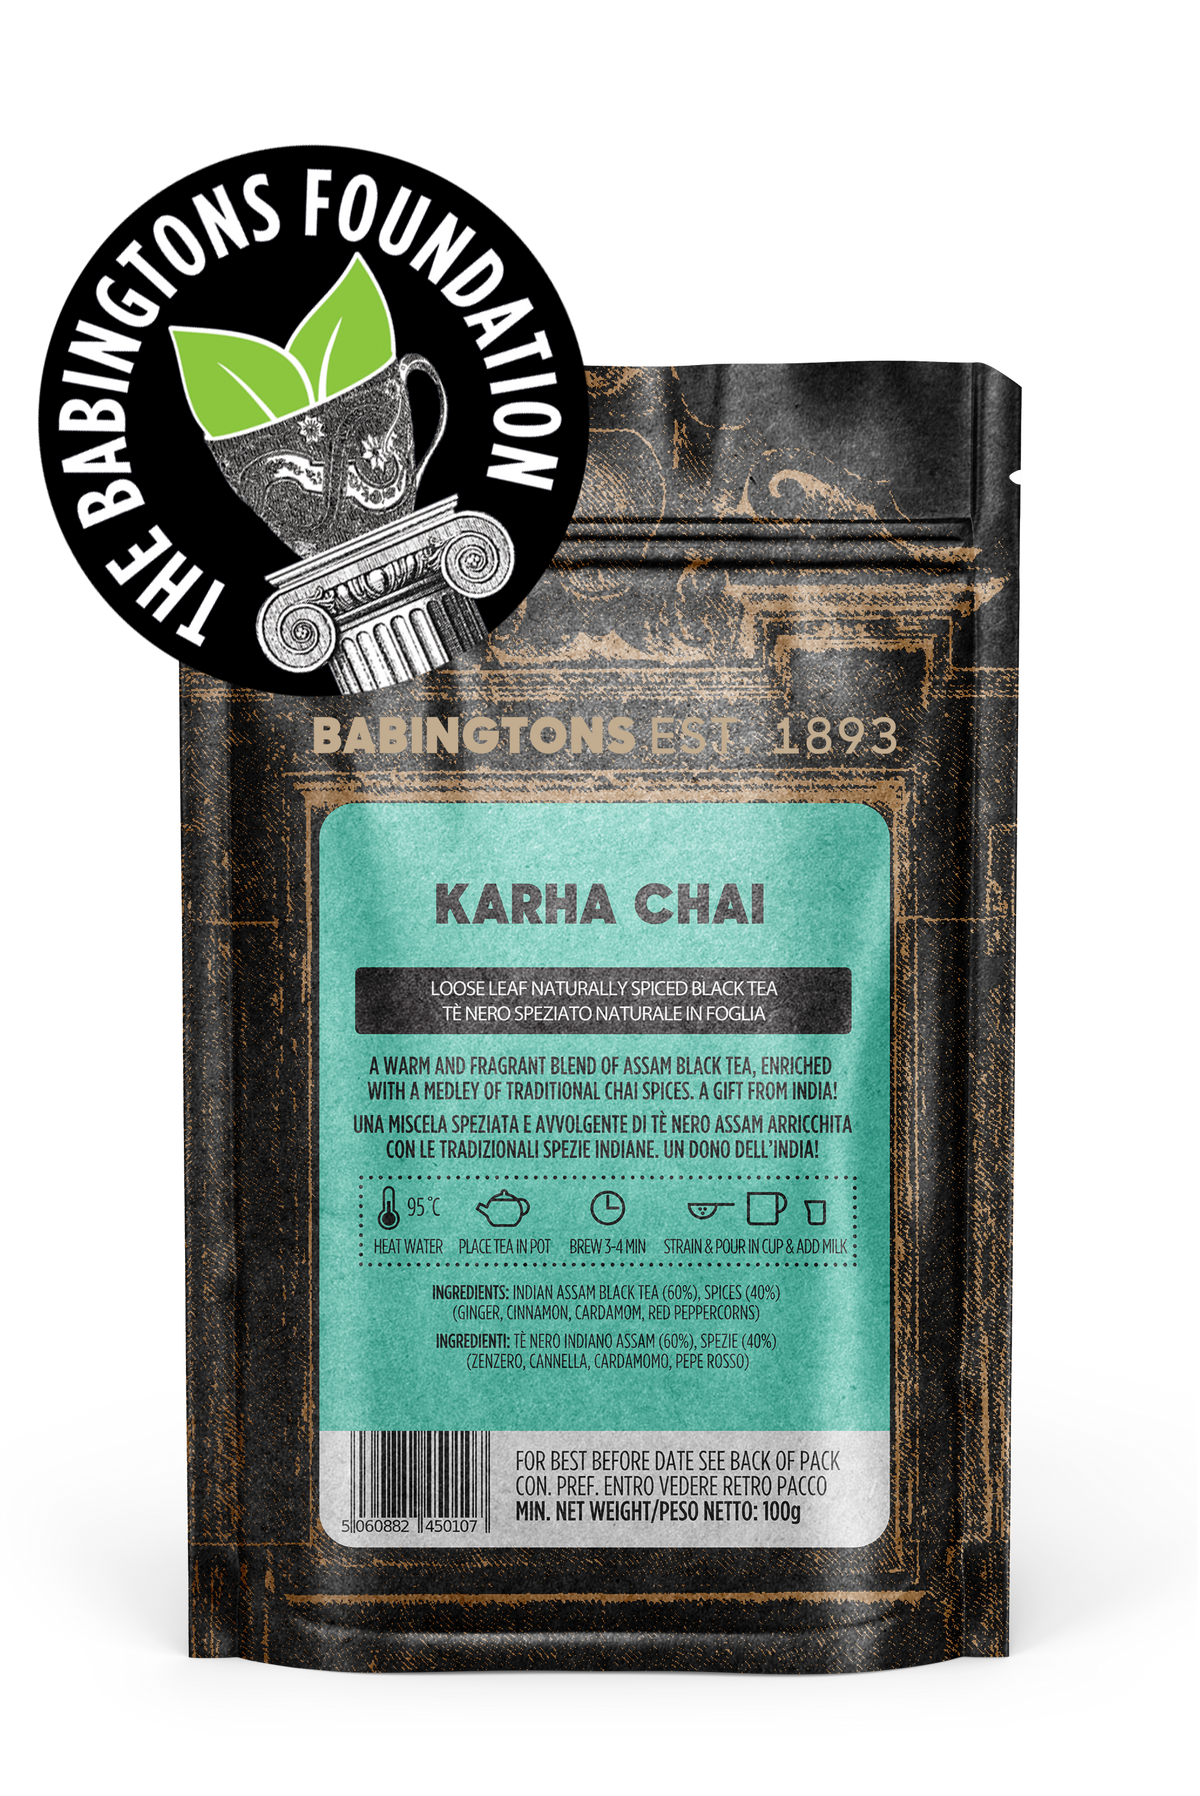 Karha Chai - Zip bag: Loose leaf